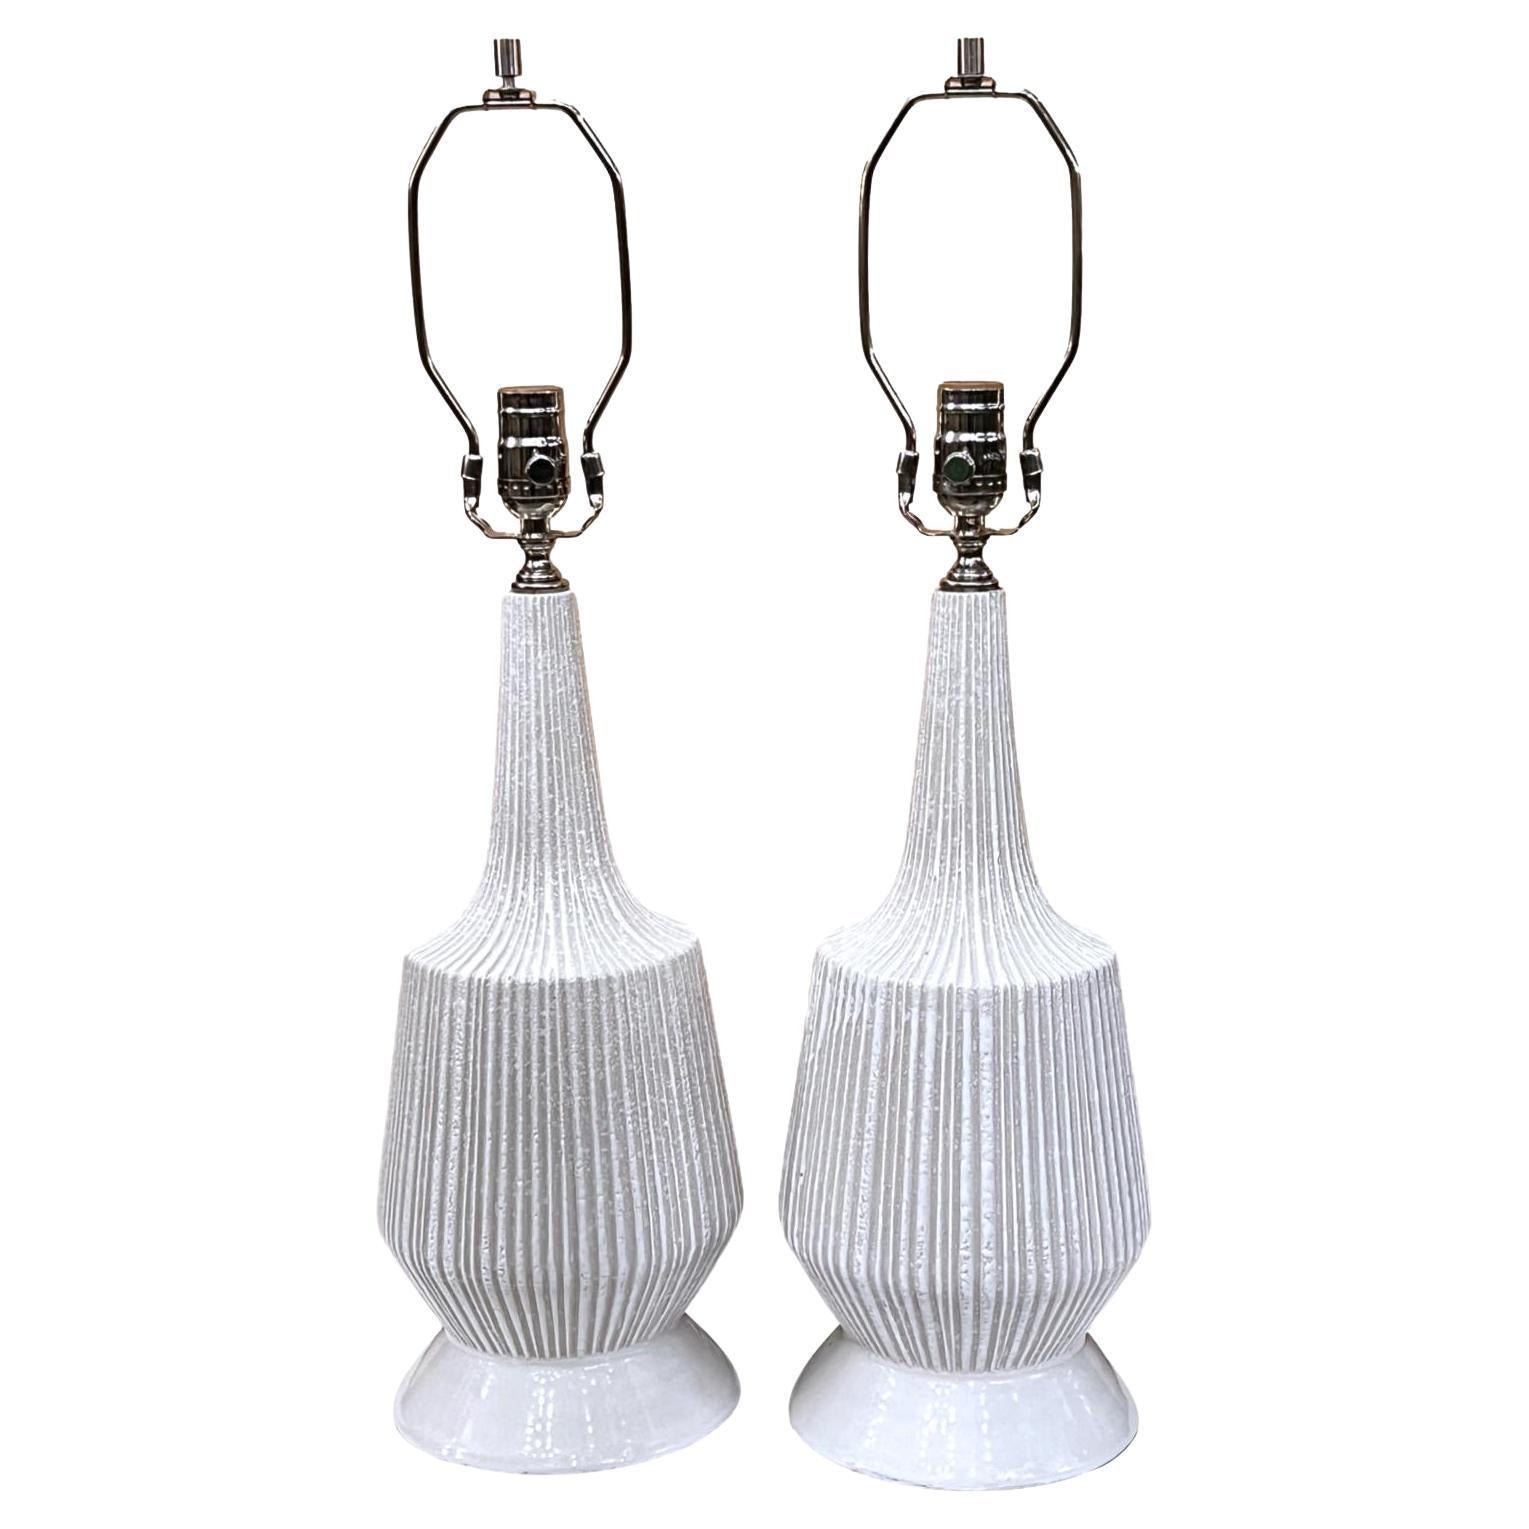 Pair of Midcentury Danish Lamps For Sale